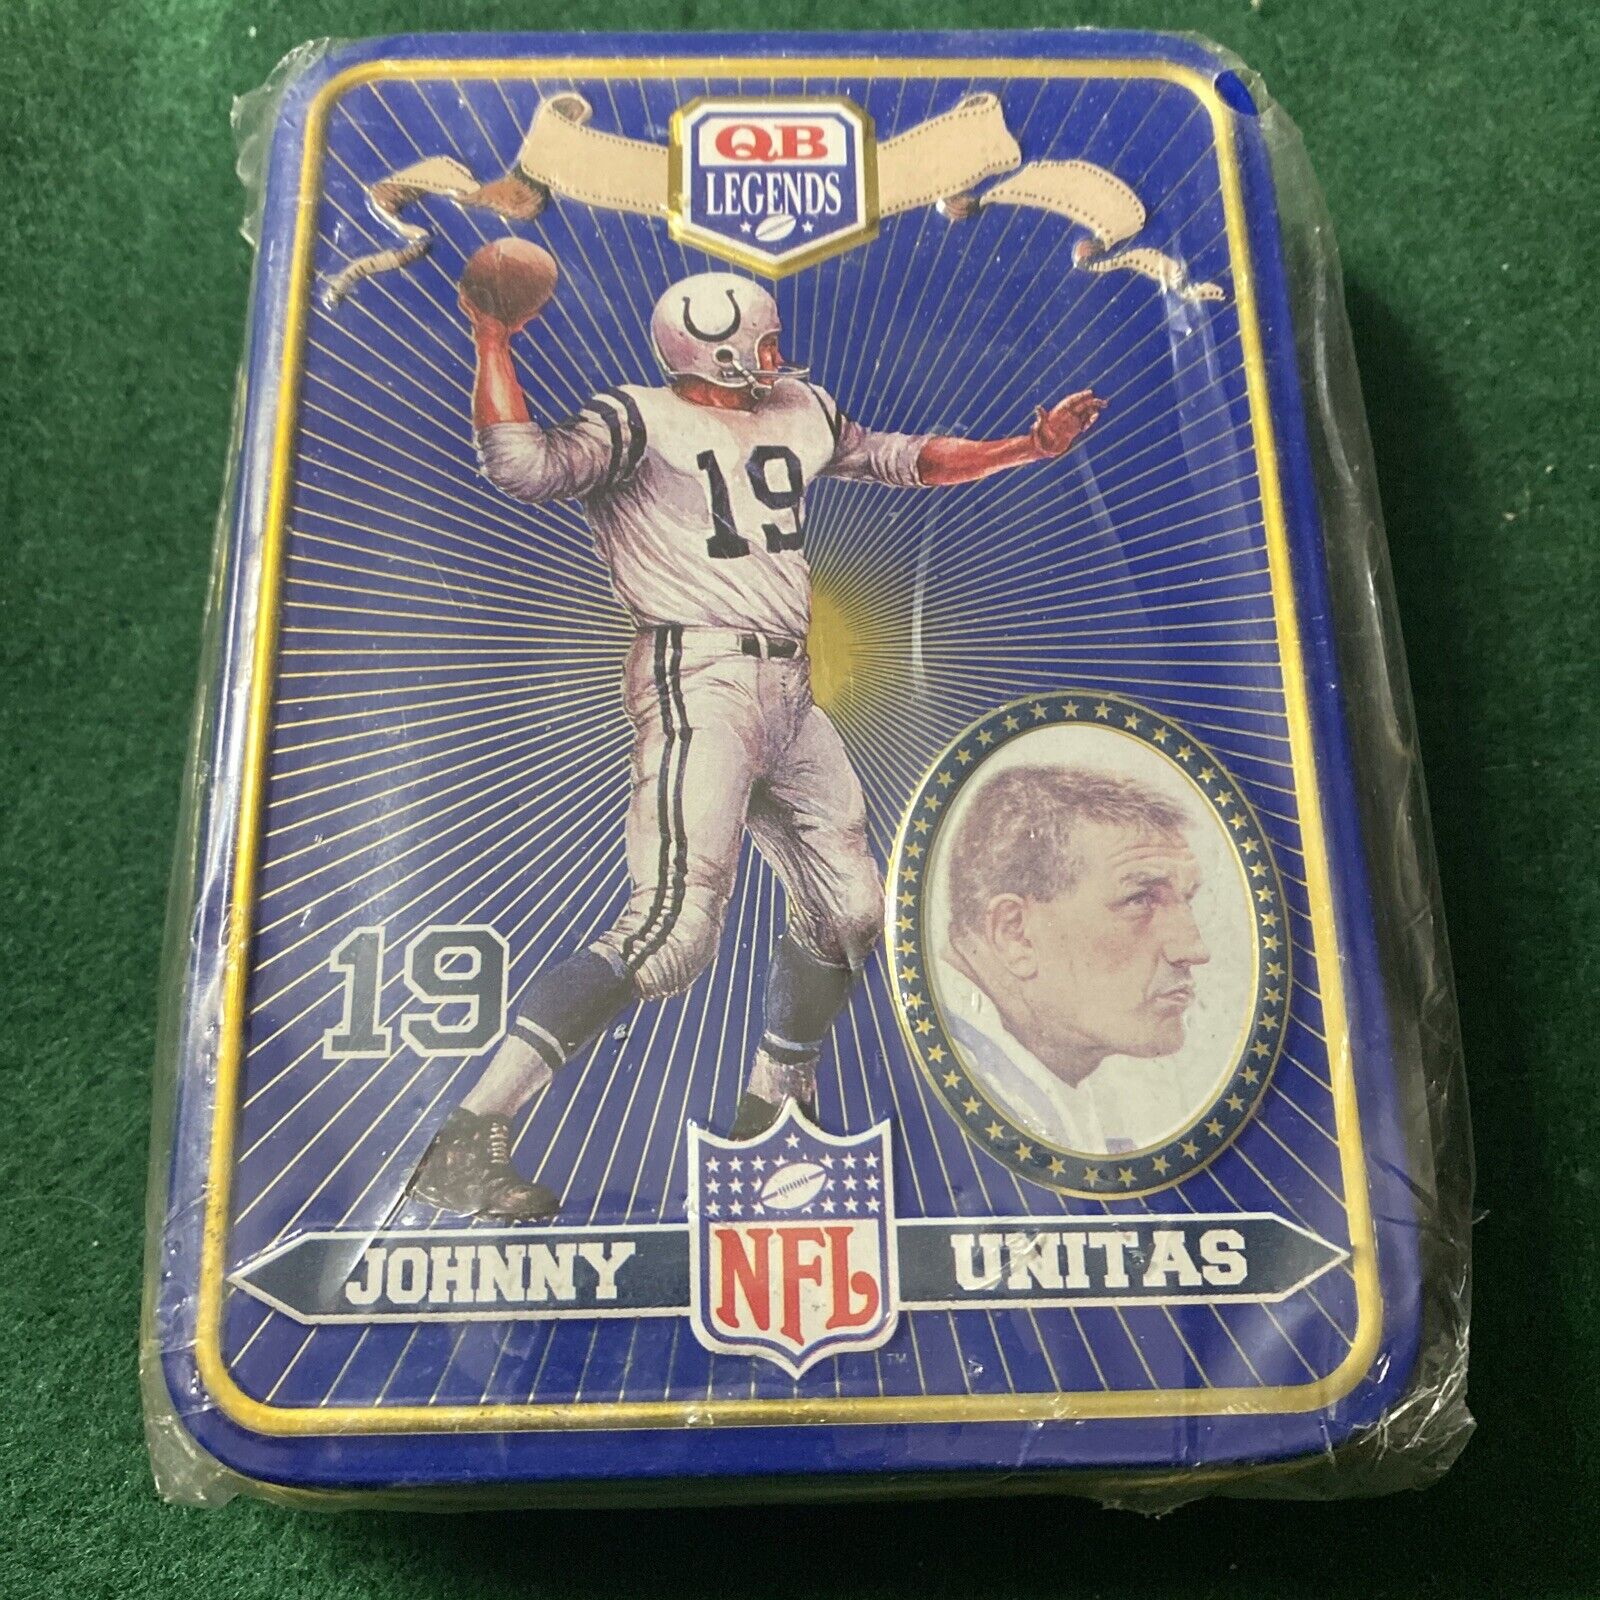 Johnny Unitas QB Legends - Quarterback Tin - Two Sets of Playing Cards - Sealed